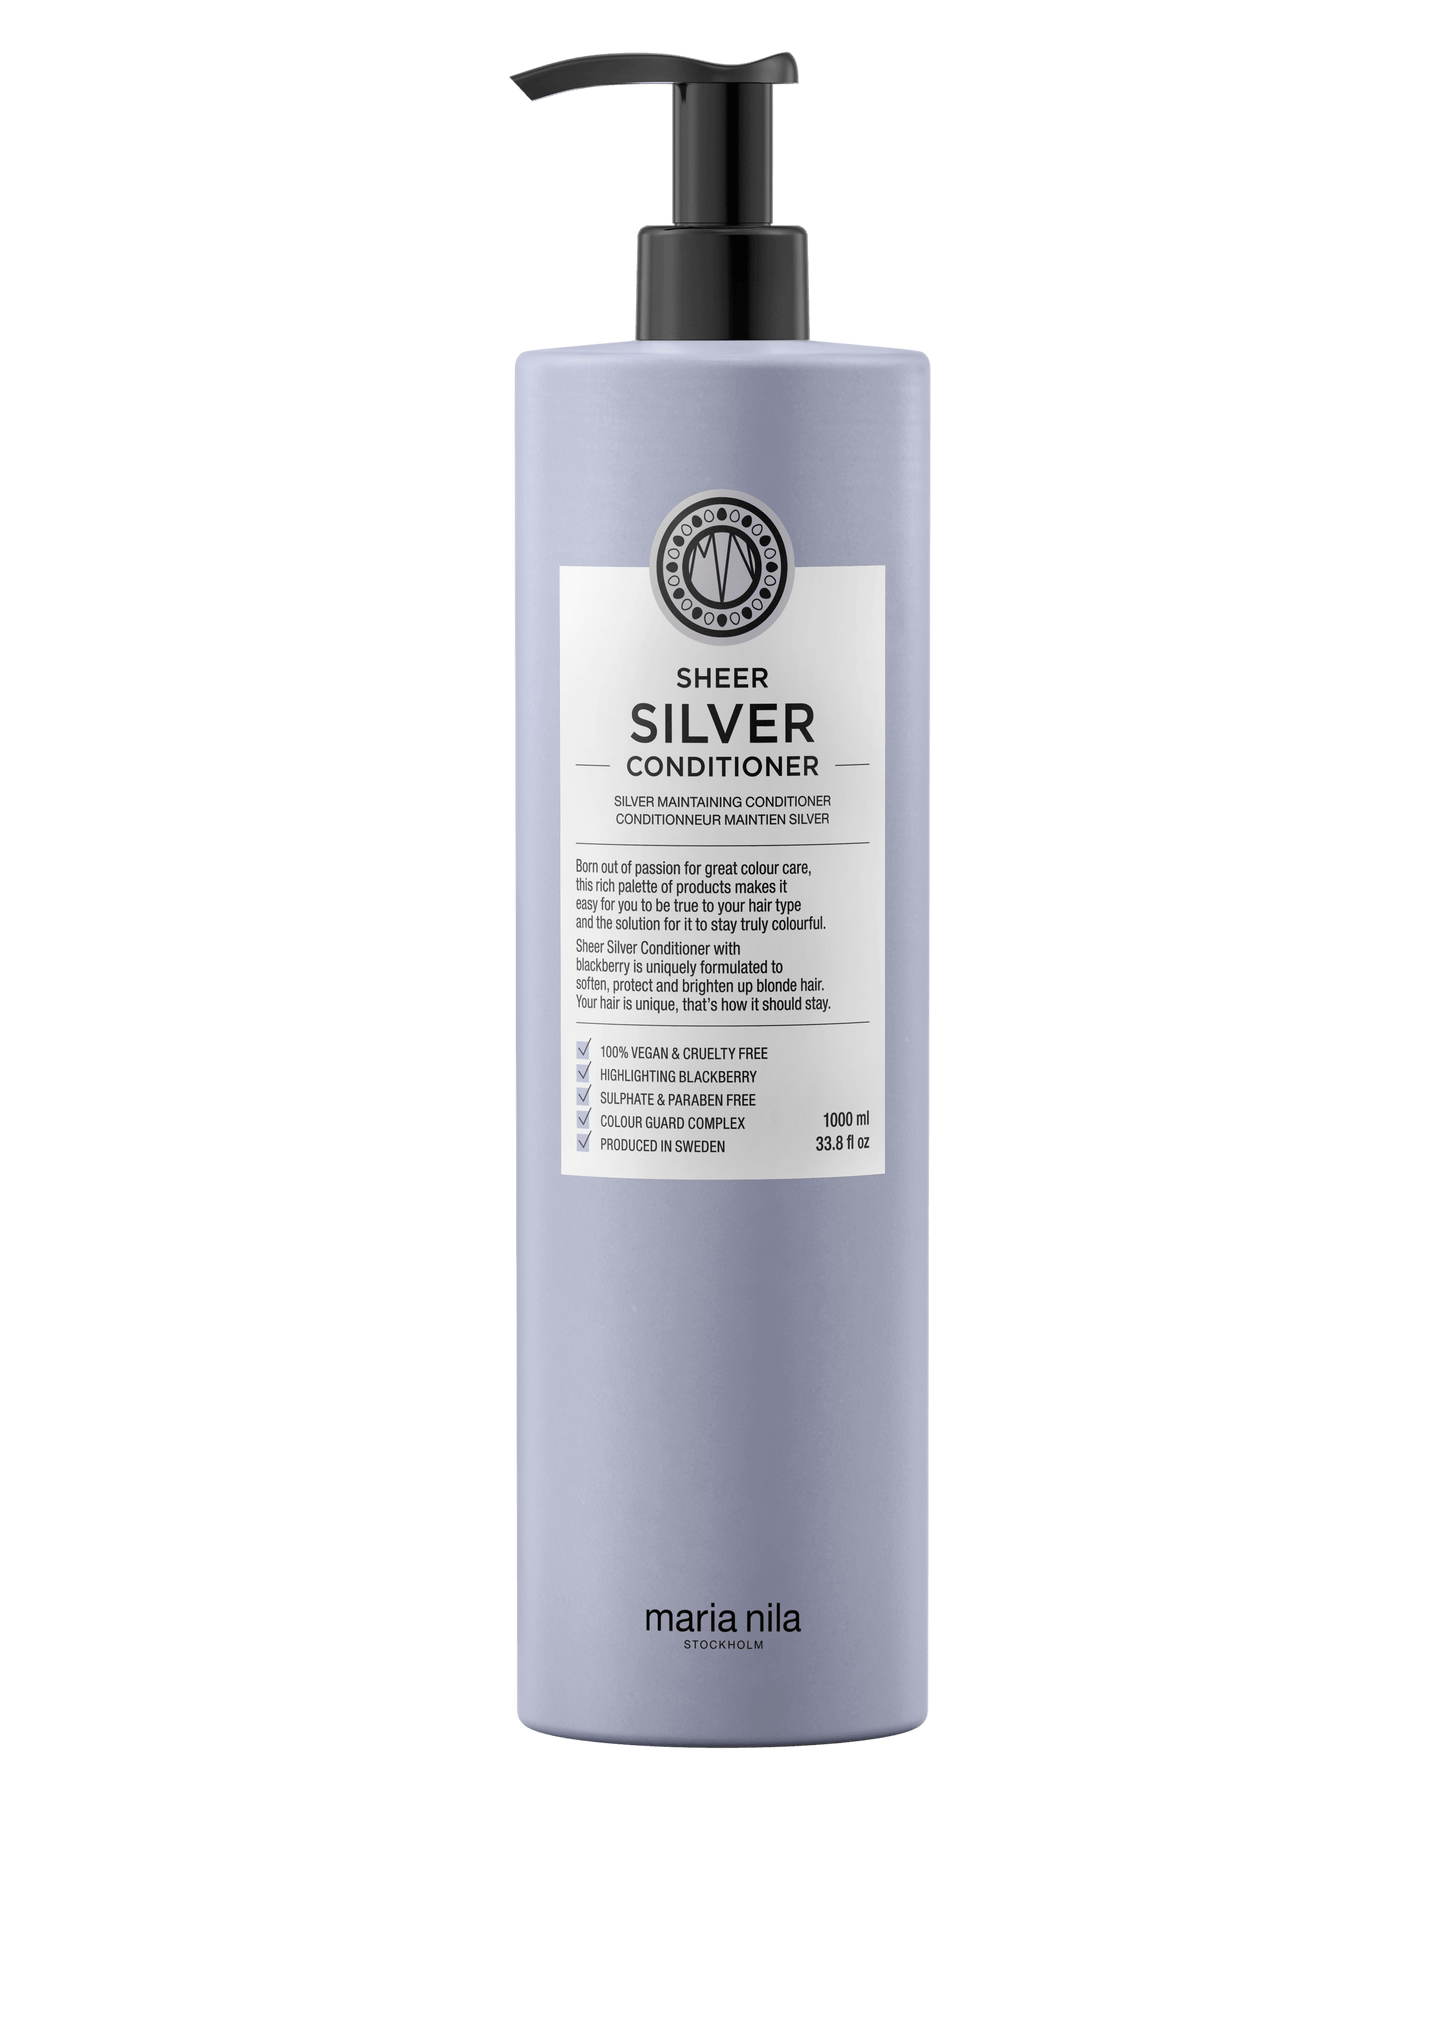 Sheer Silver Conditioner - The Coloroom 